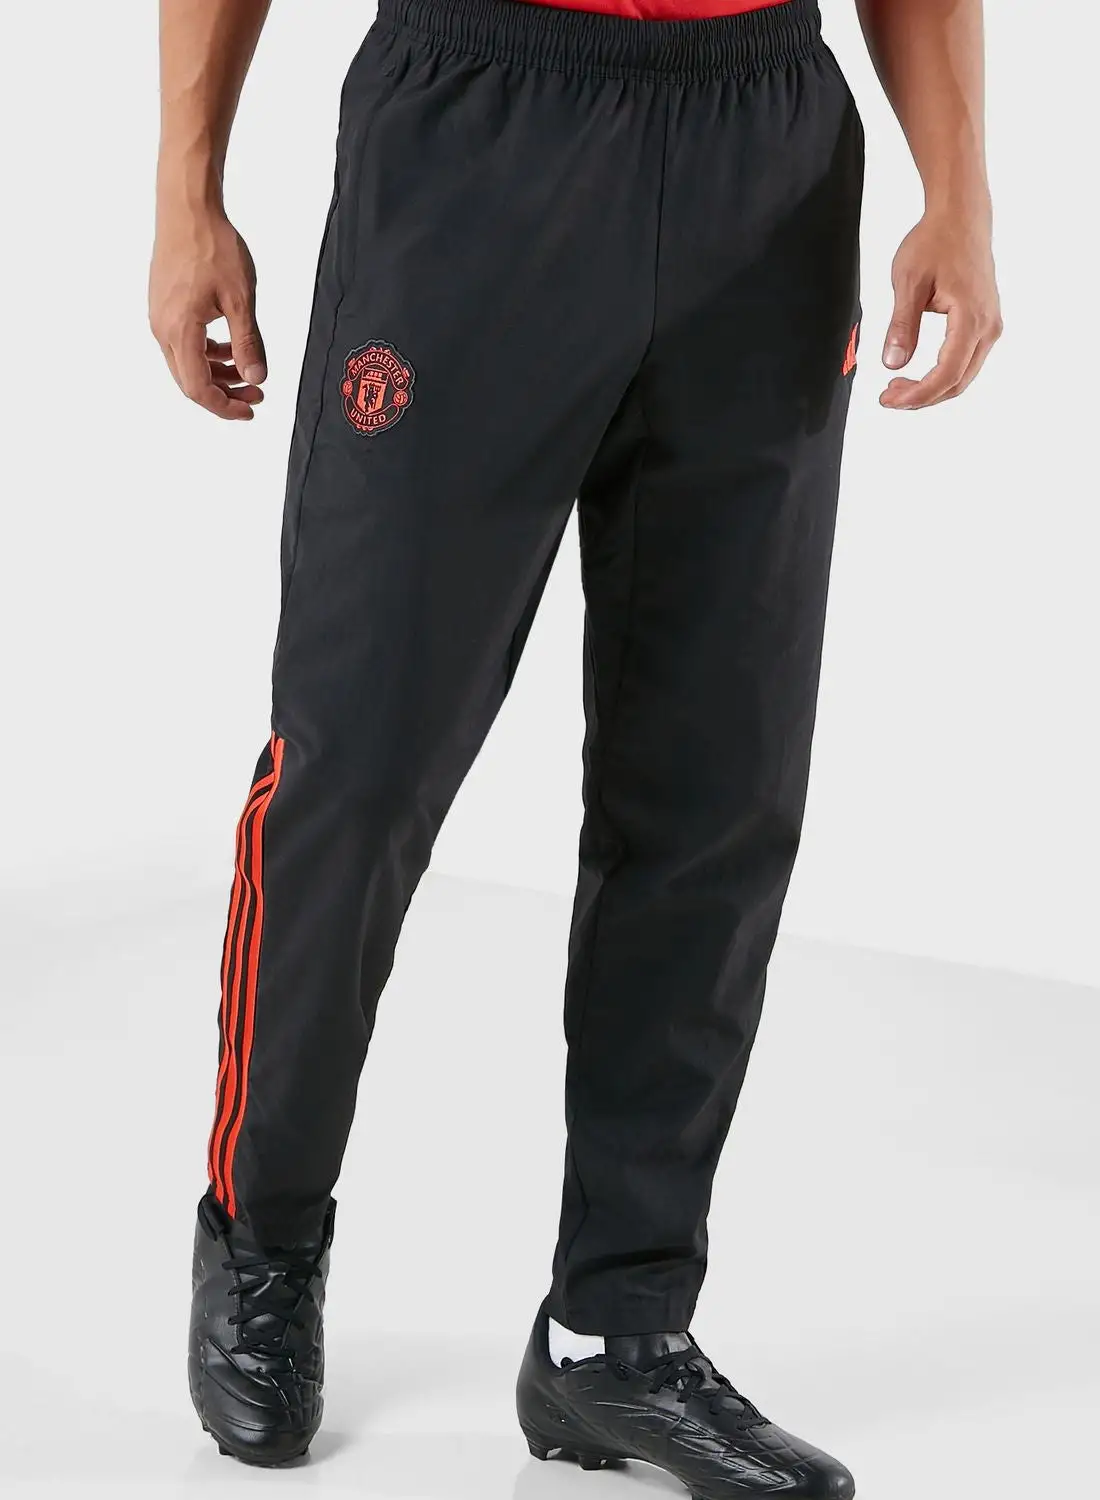 Adidas Manchester United Presentation Pants